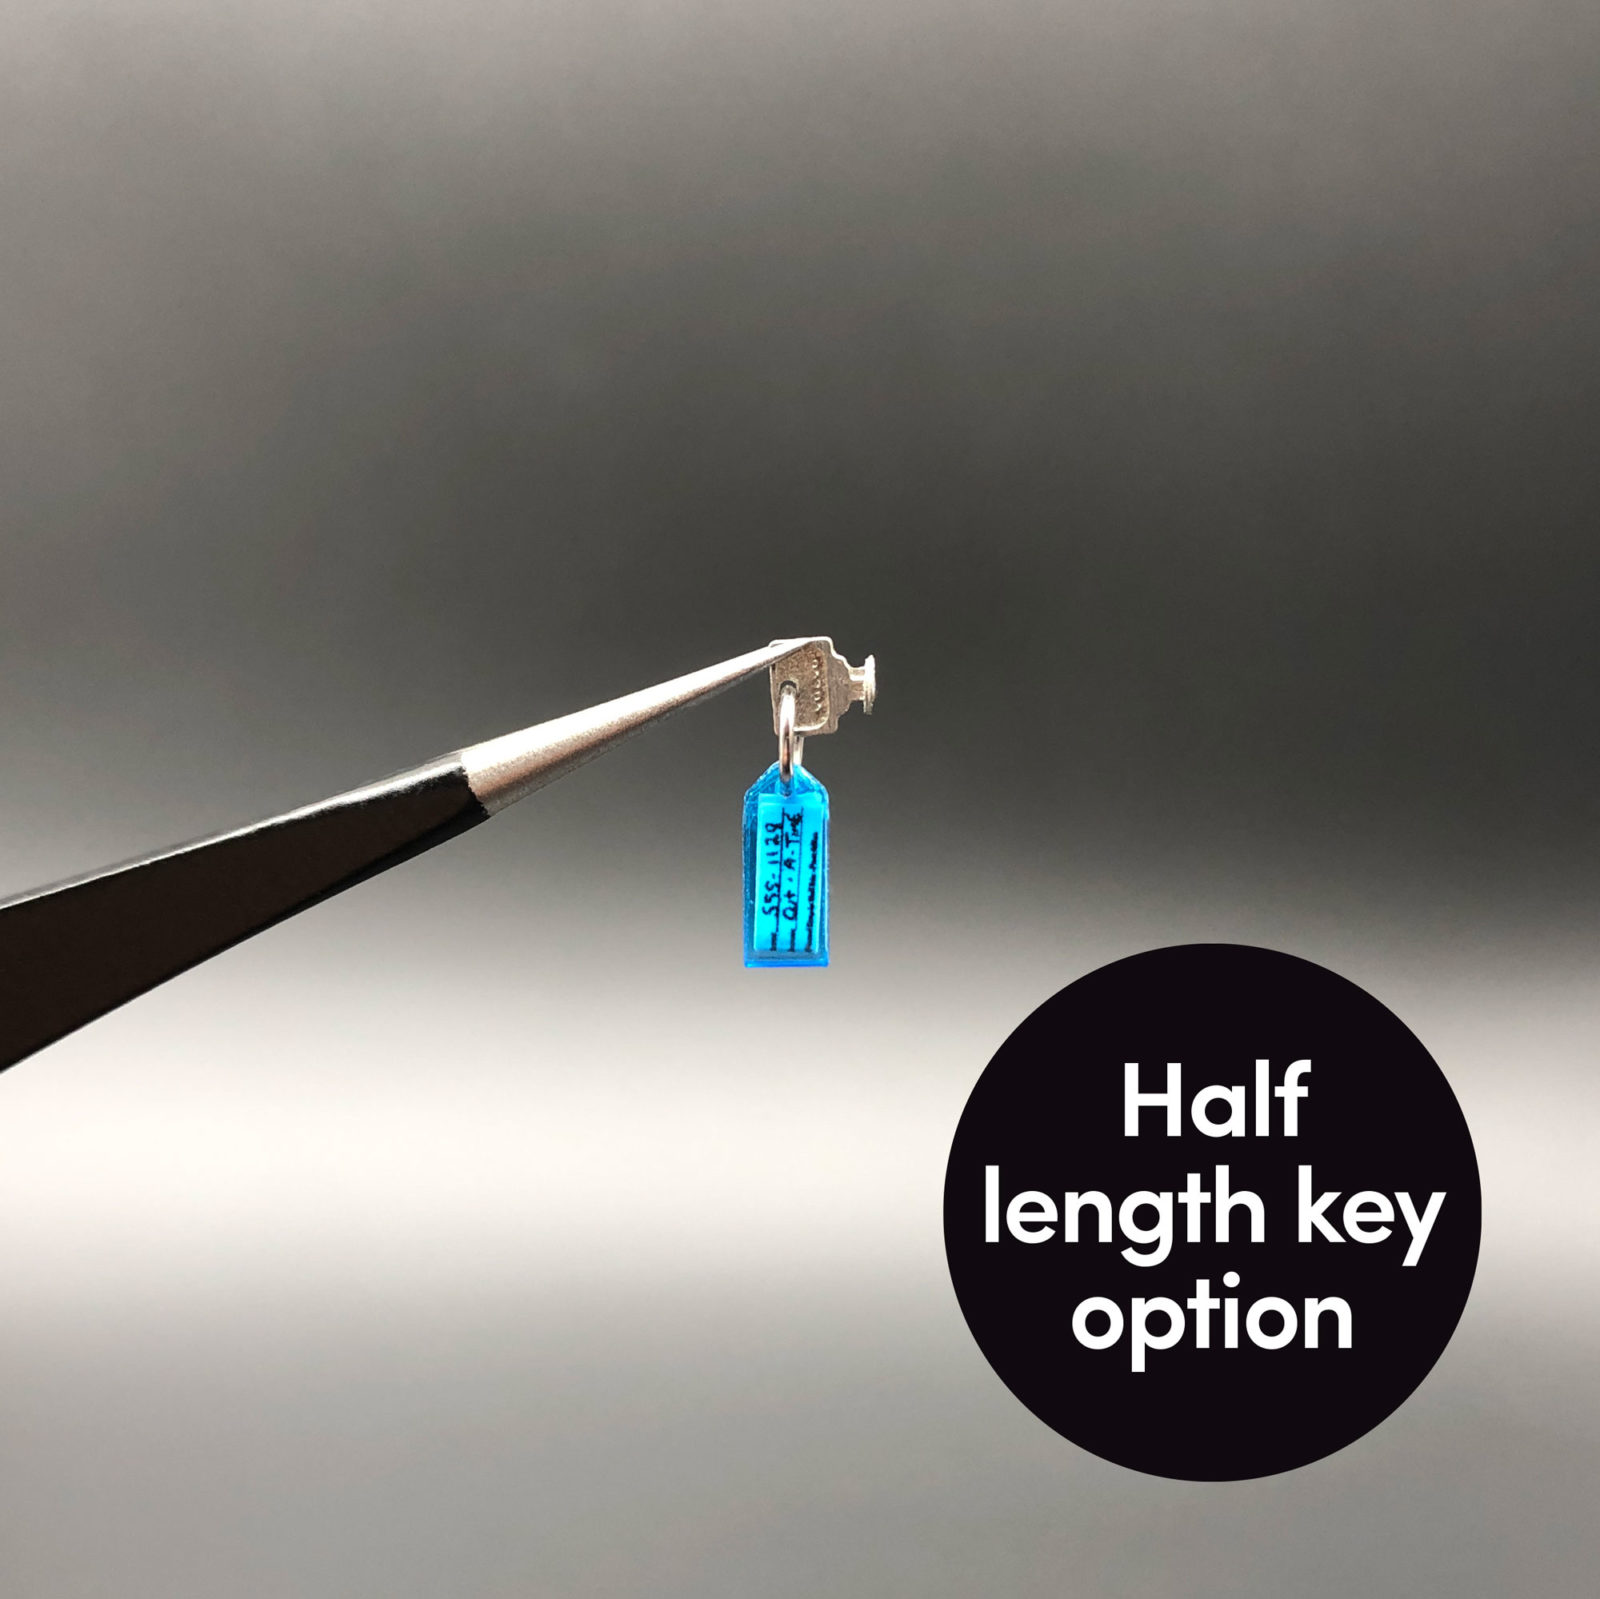 Half length key option from Metal Keys and Key Tag mod